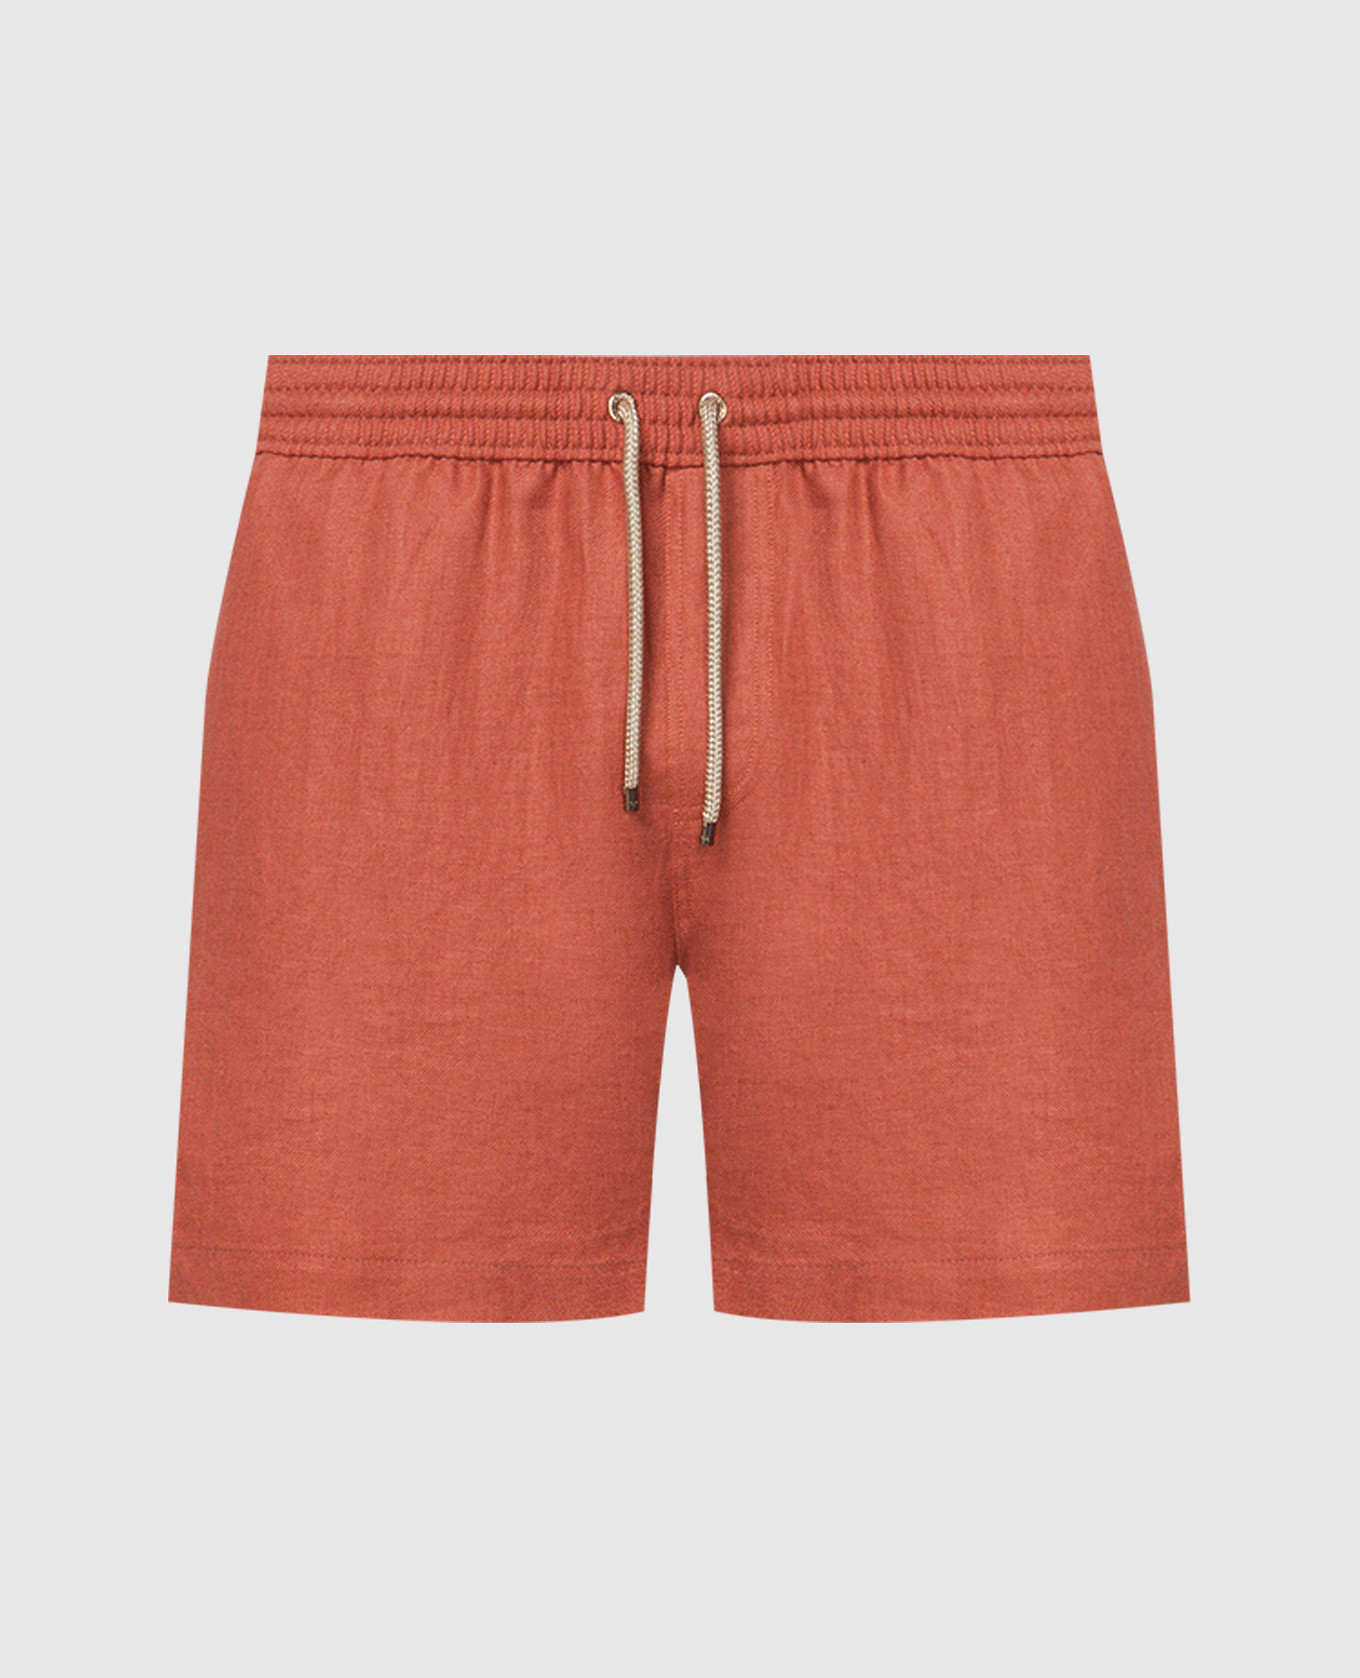 Brown linen swim shorts